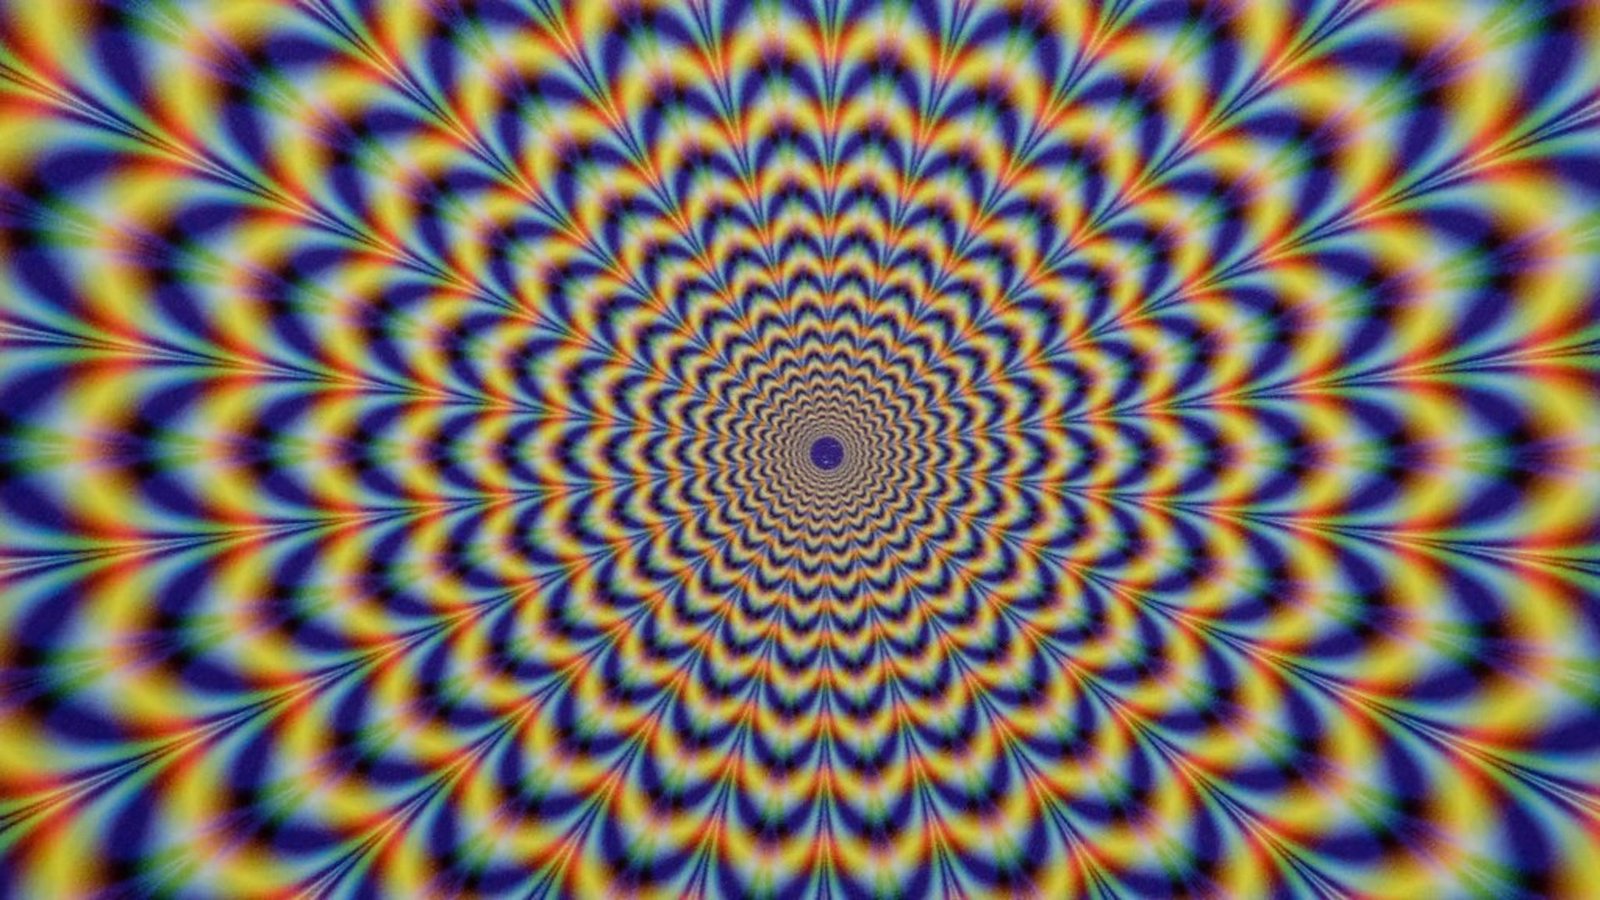 Featured image for “Optische Illusionen Teil 2”